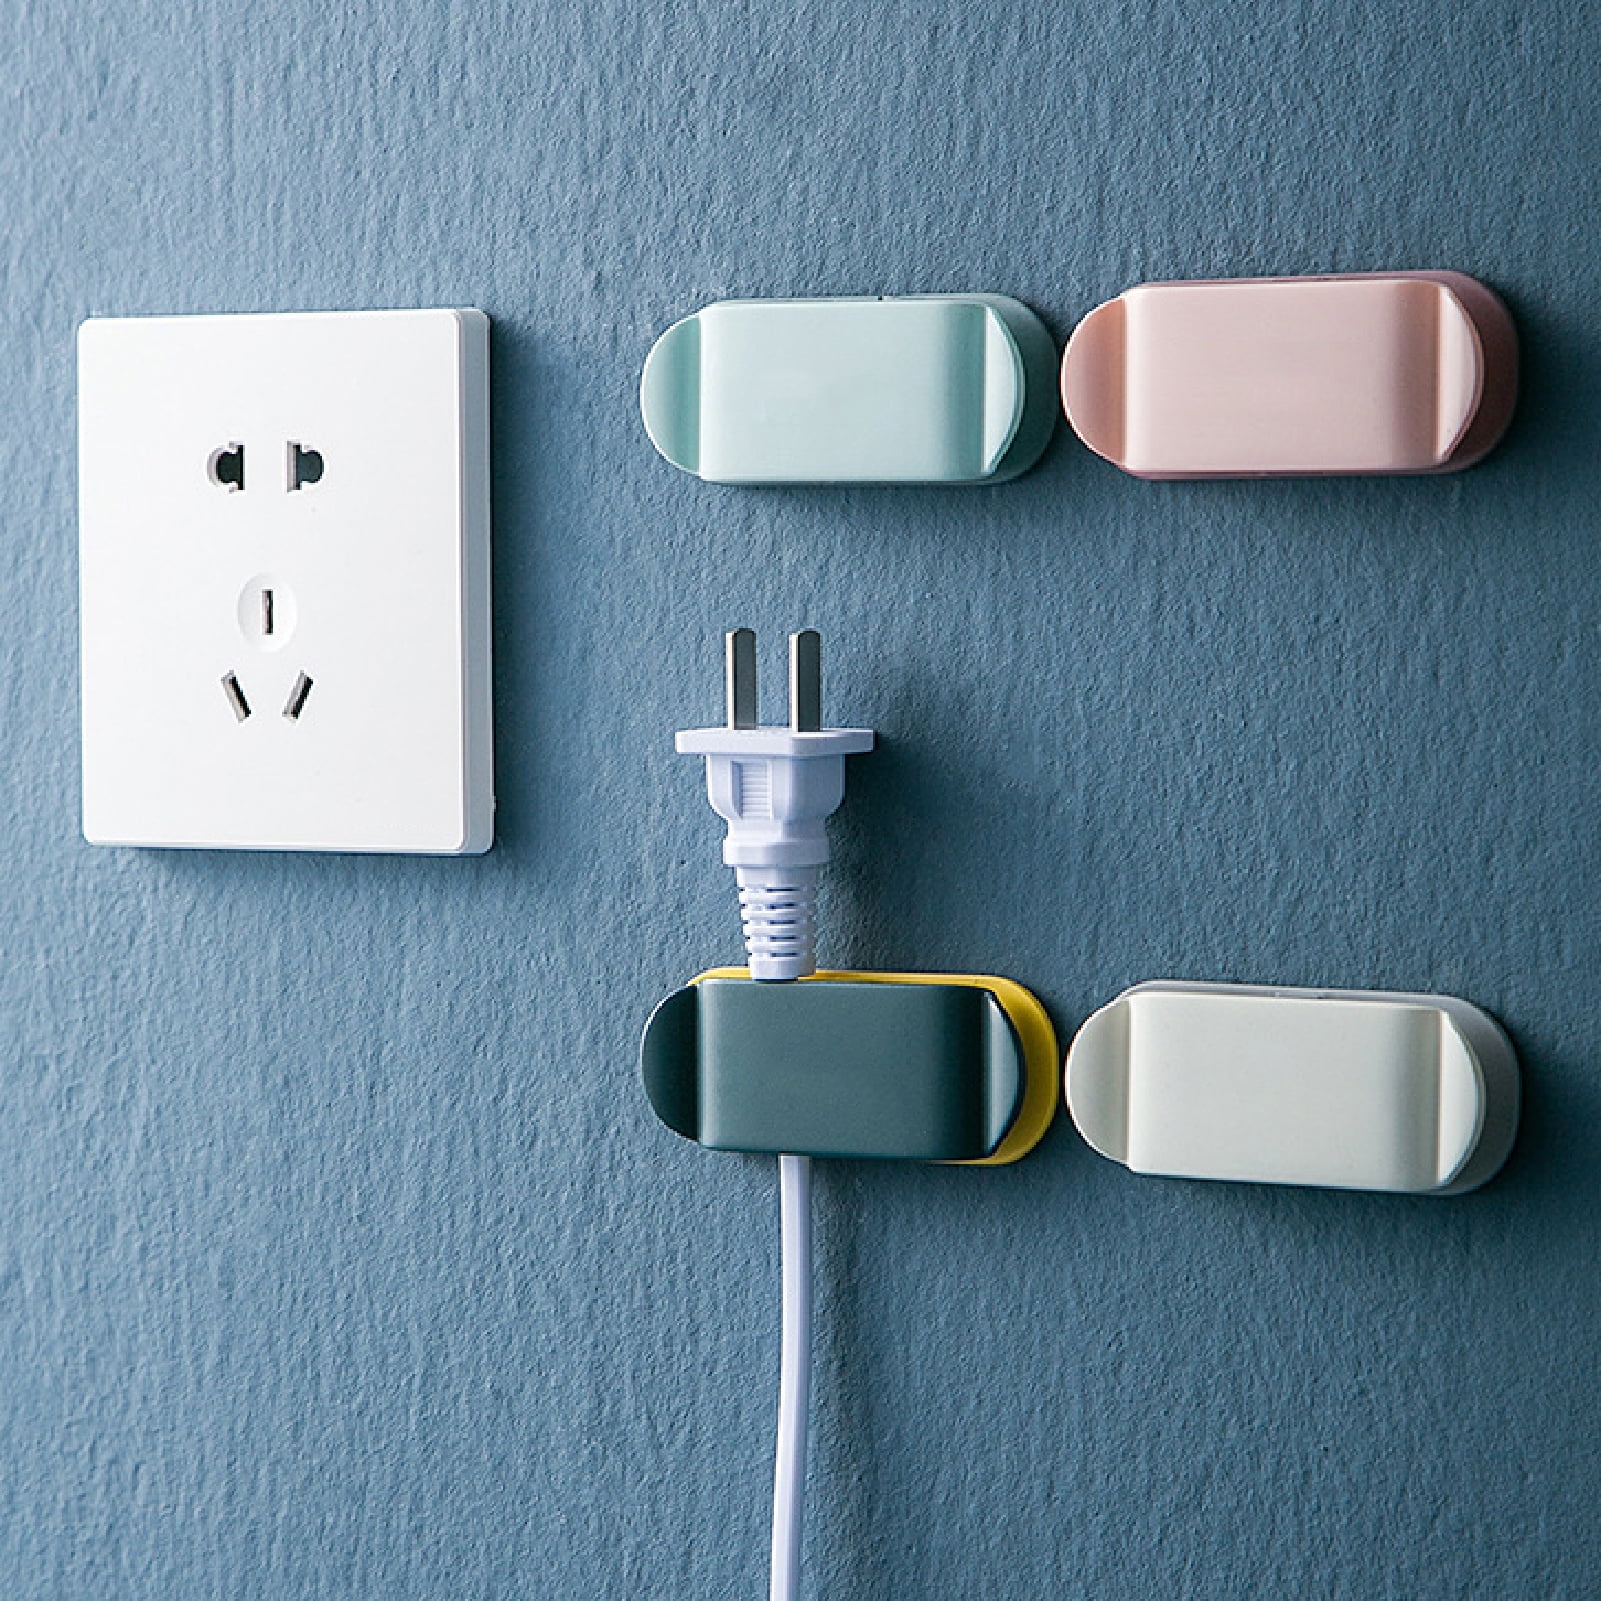 4Pcs Home Office Wall Adhesive Plastic Power Plug Socket Holder Hanger Hook YR 